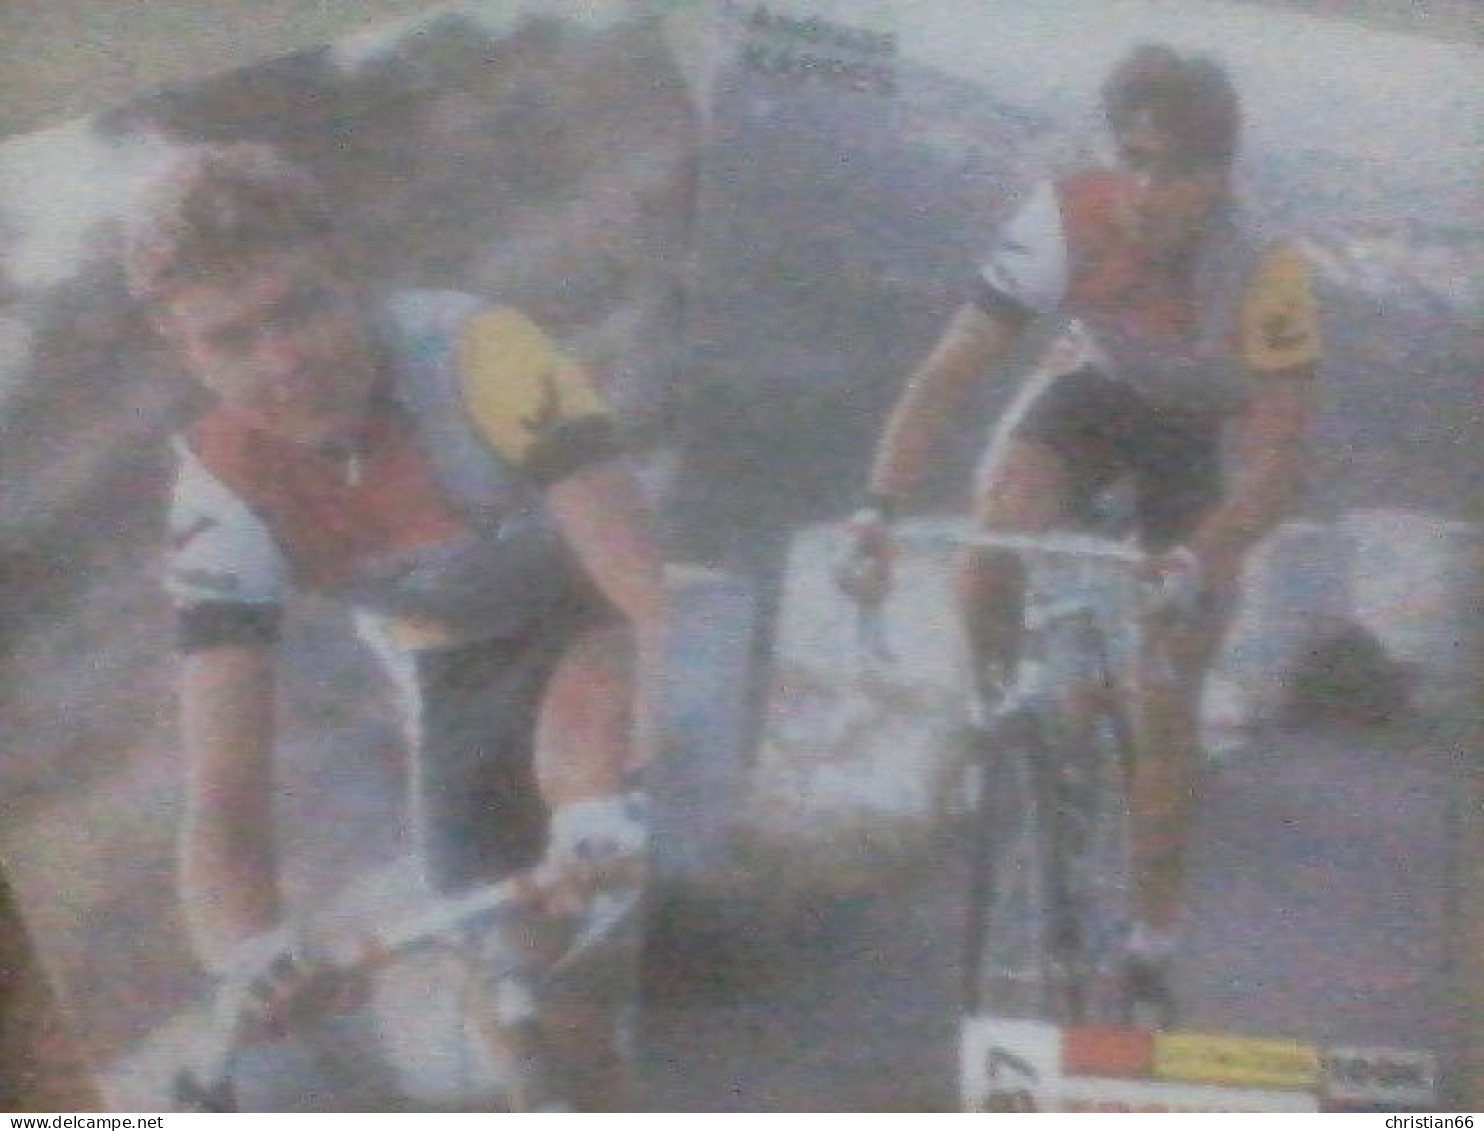 CYCLISME  - WIELRENNEN- CICLISMO : 2 CARTES ANDREAS KAPPES + JAANUS KUUM 1987 - Radsport